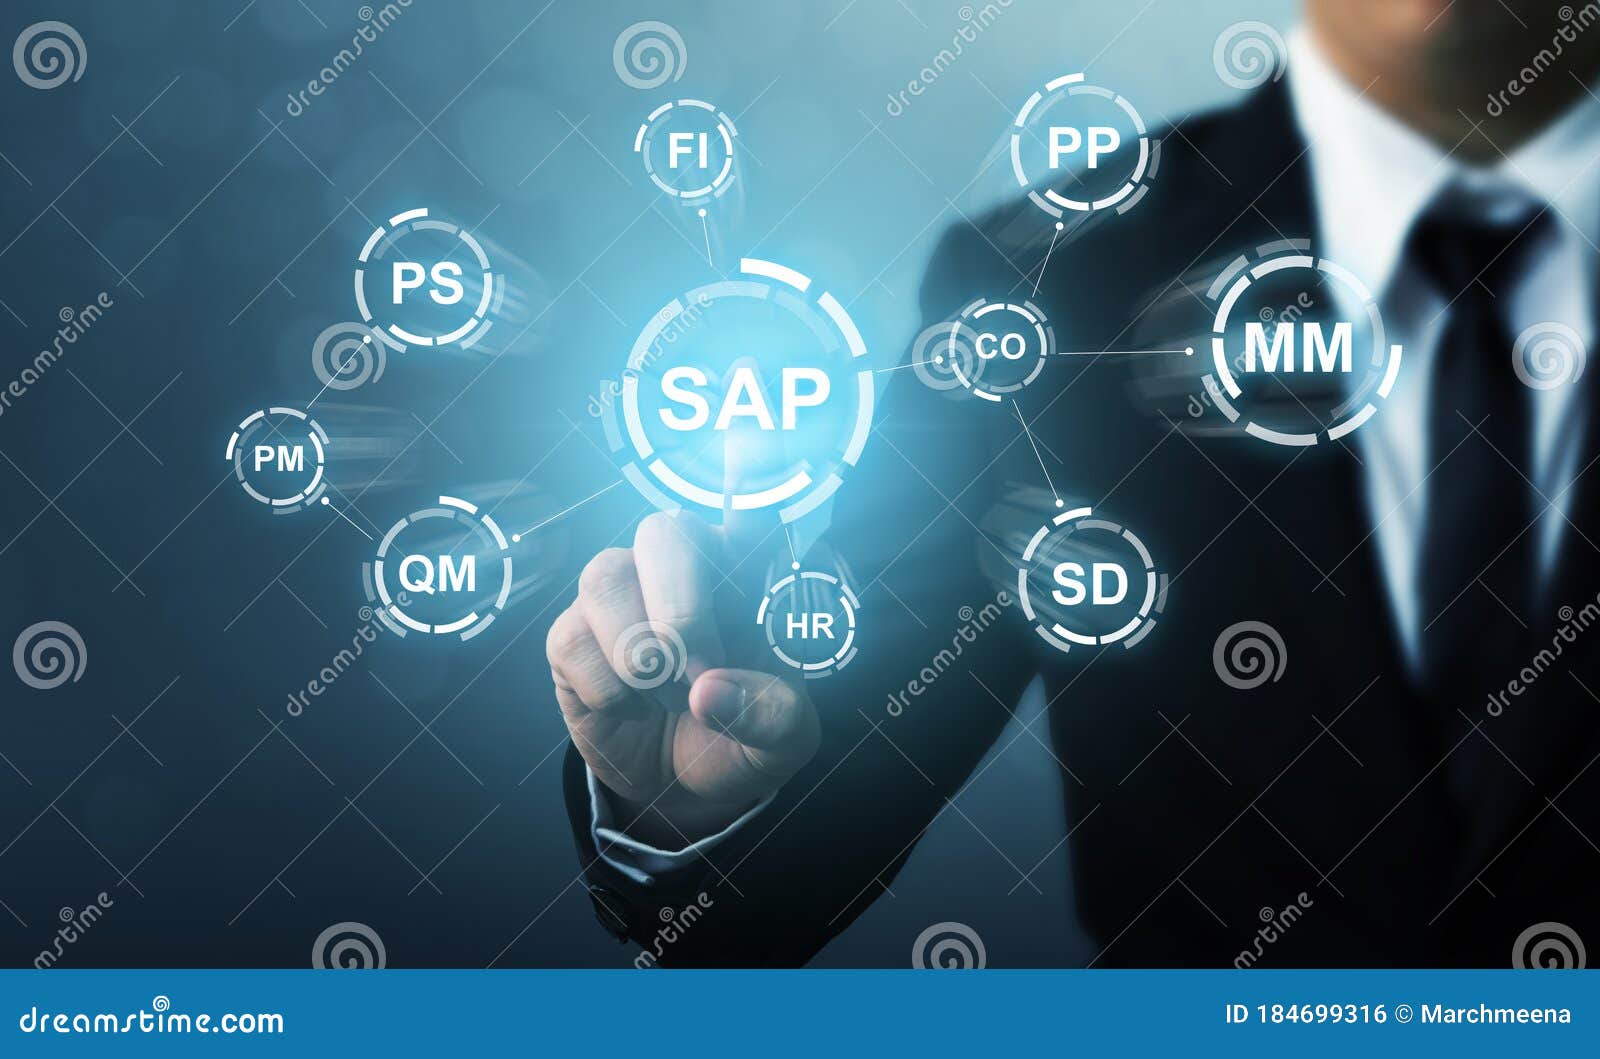 business management software sap. erp enterprise resources planning system concept